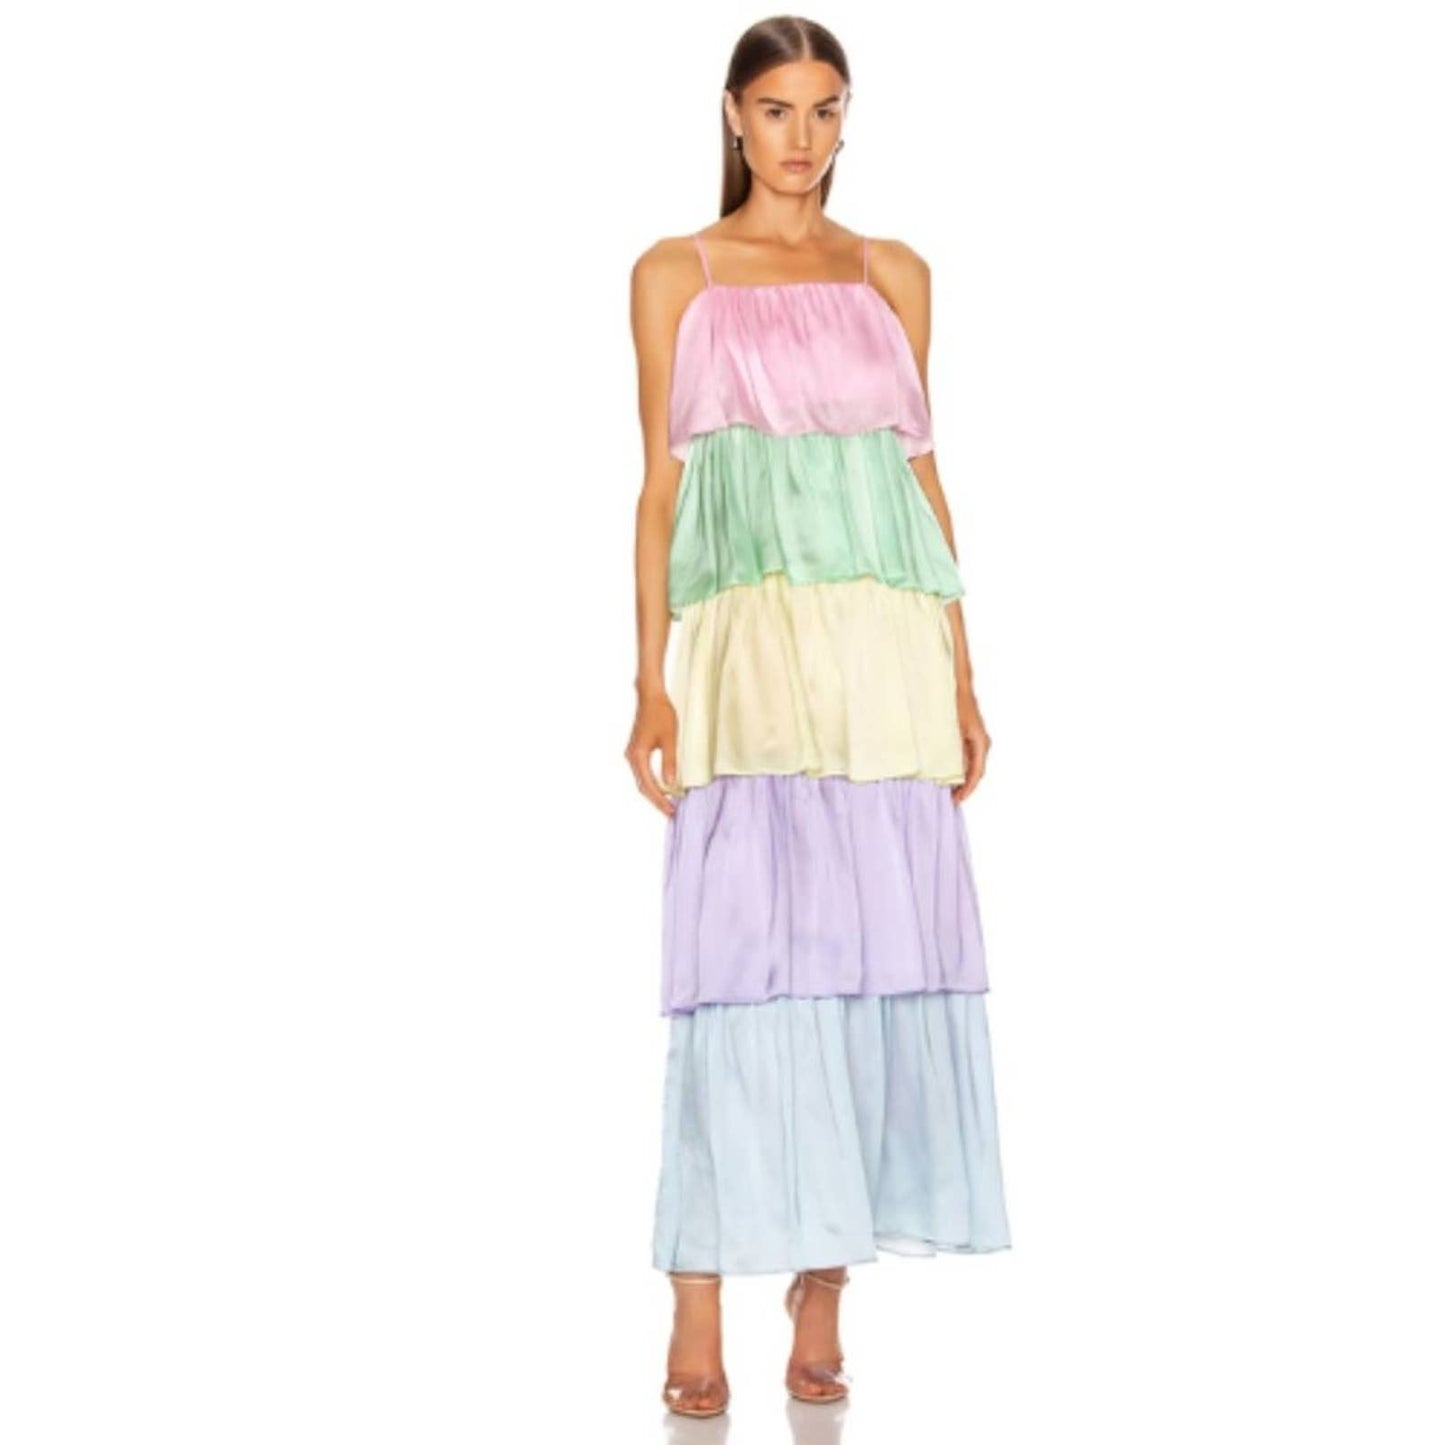 Olivia Rubin Cici Dress in Neapolitan Colorblock Size 2